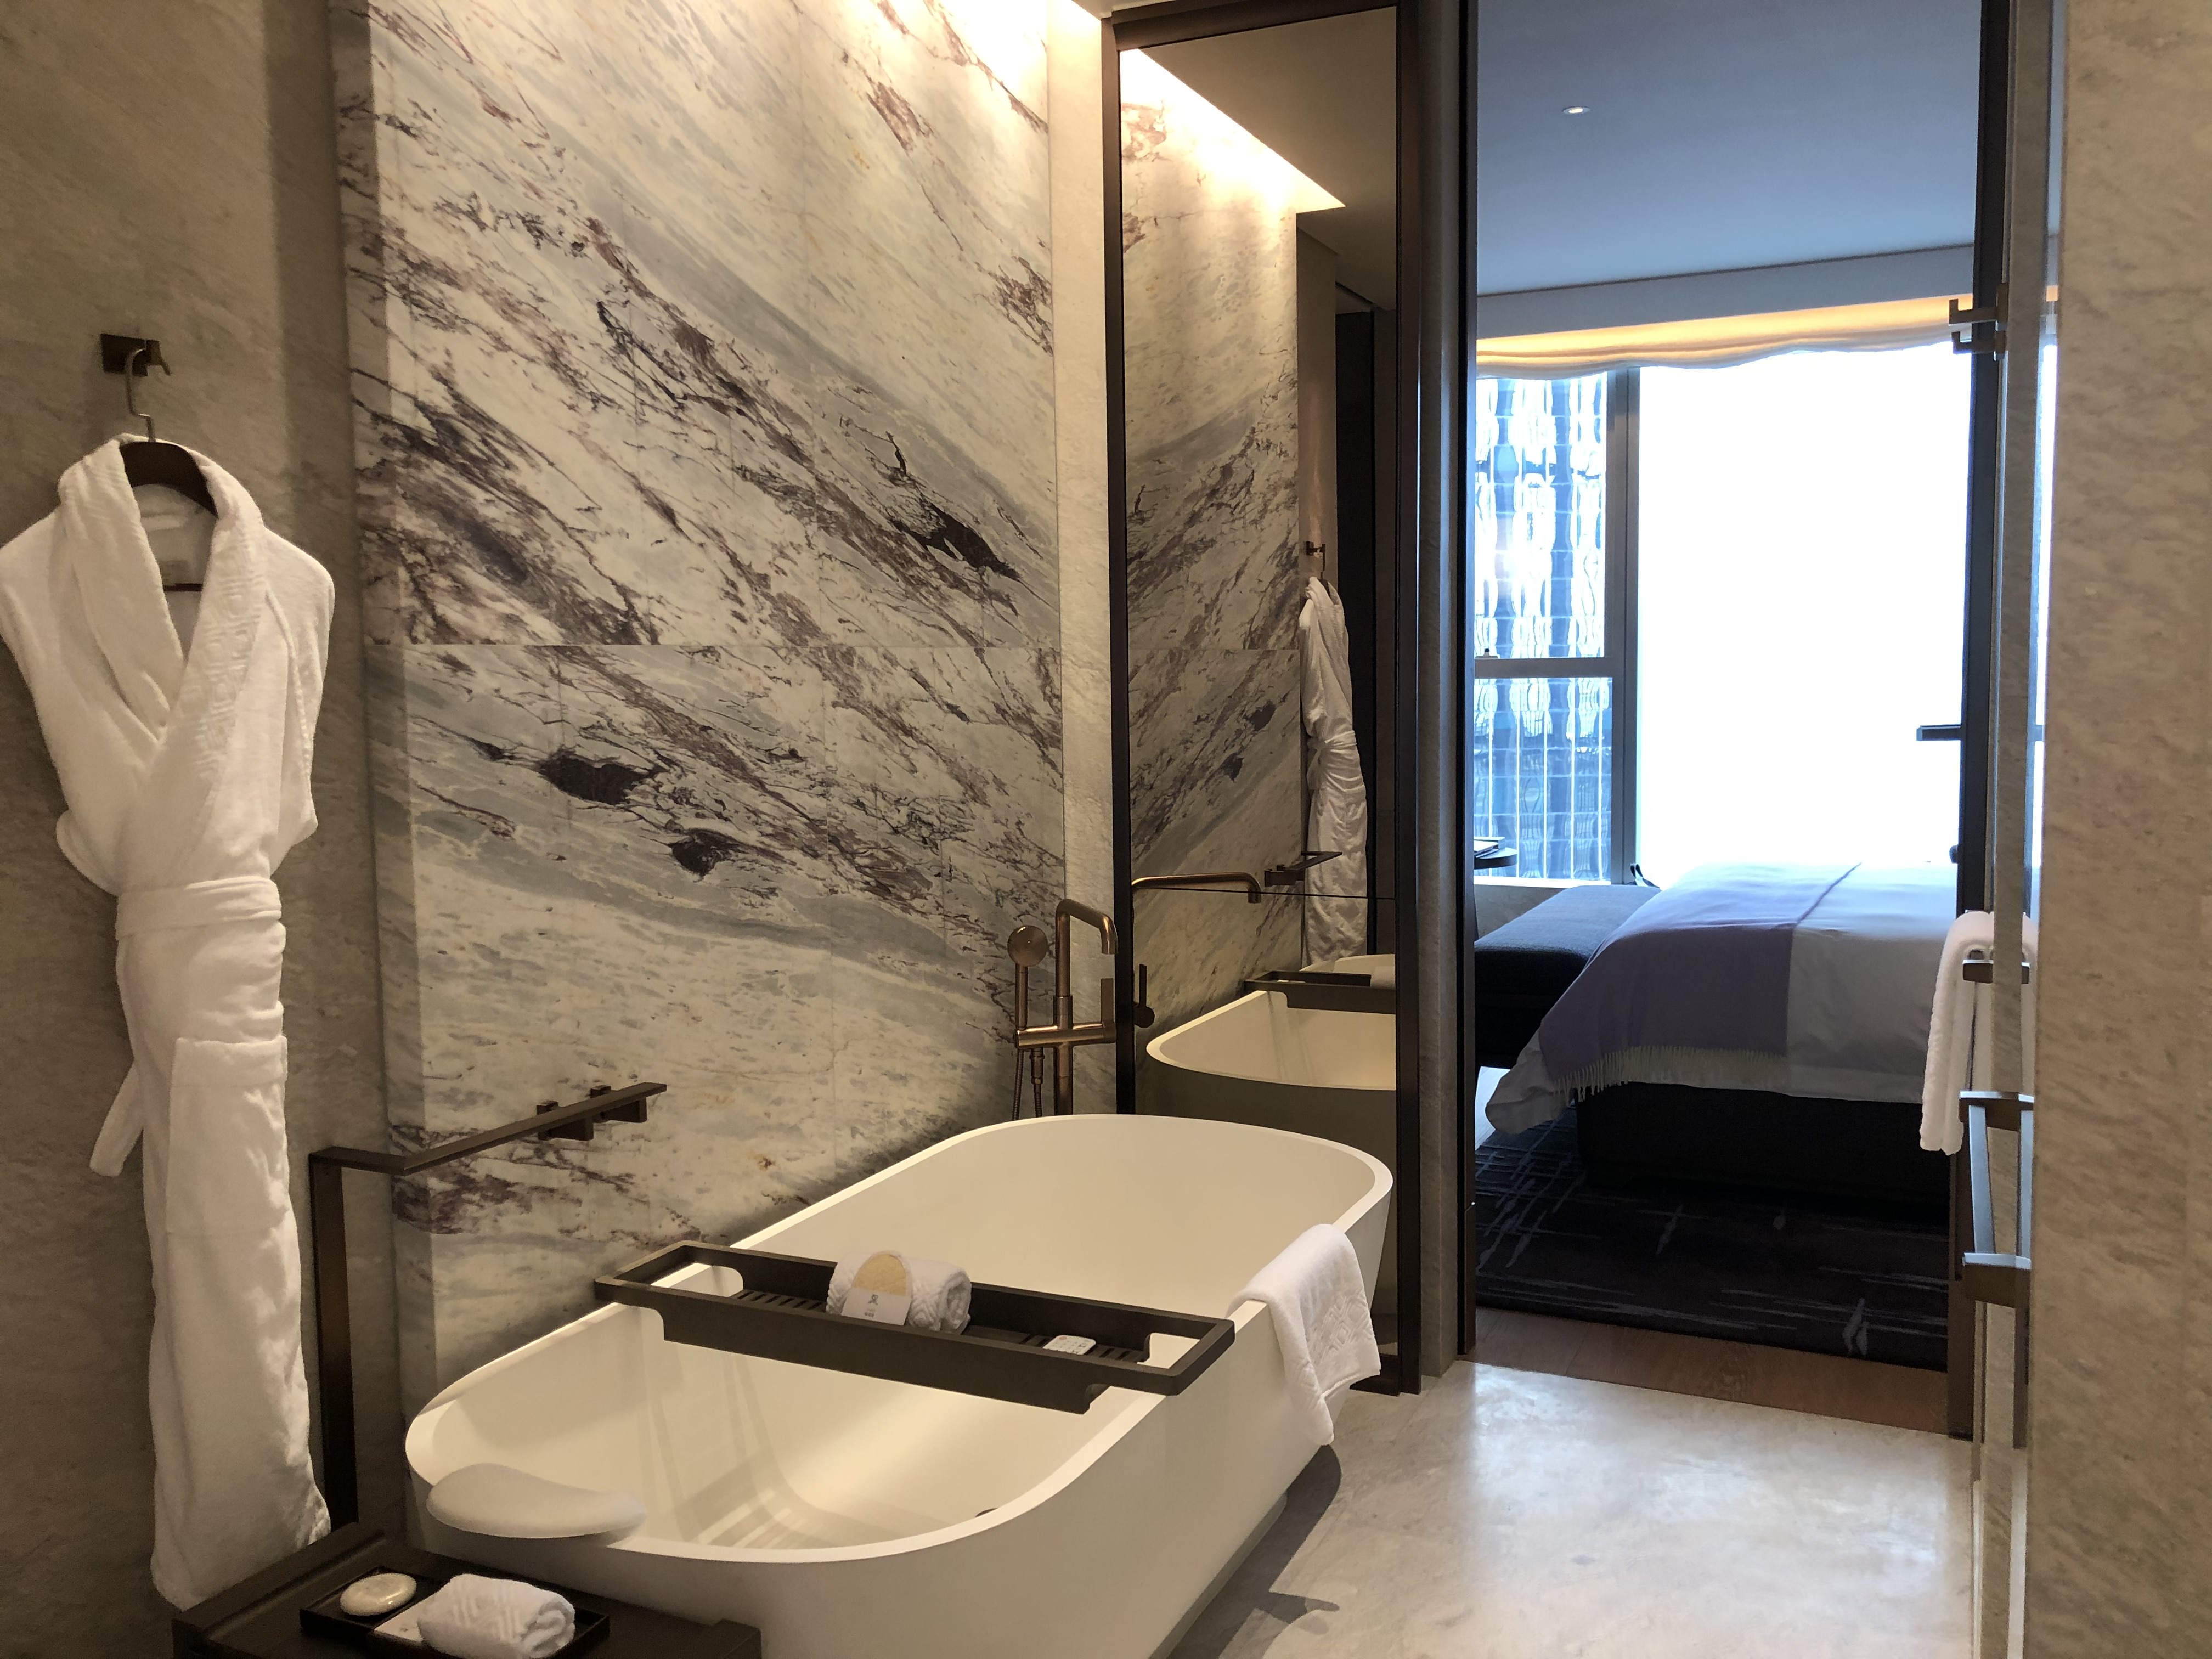 St. Regis Hong Kong, hotel bathroom, marble, free standing tub